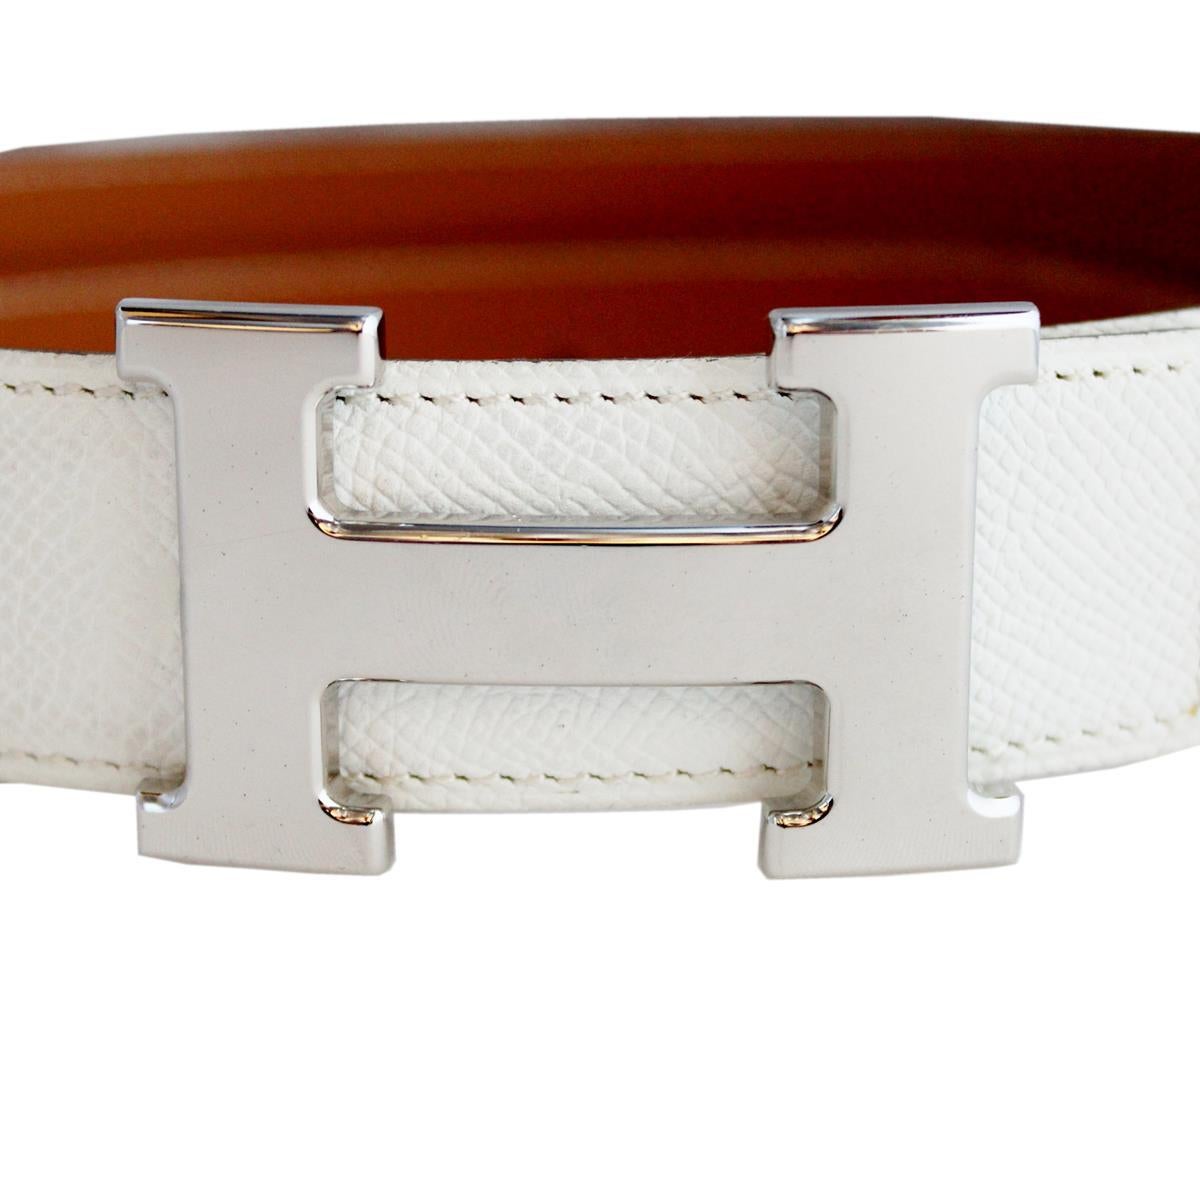 Iconic Hermès buckle belt
Constance
Leather
White color
Metal 